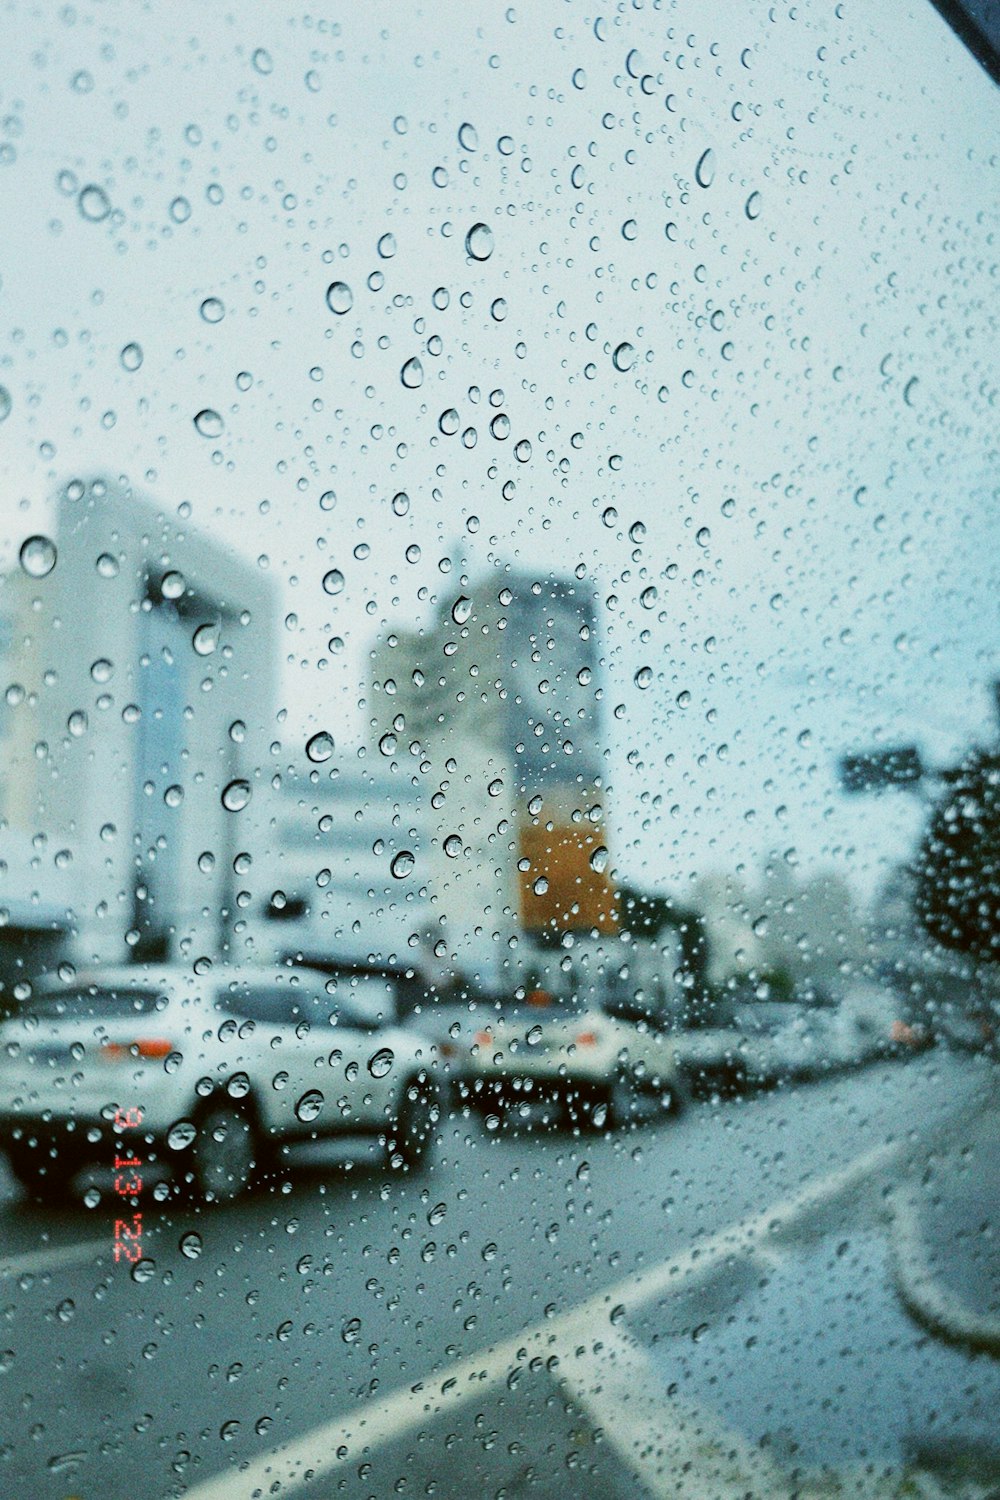 a view of a city through a rain covered window